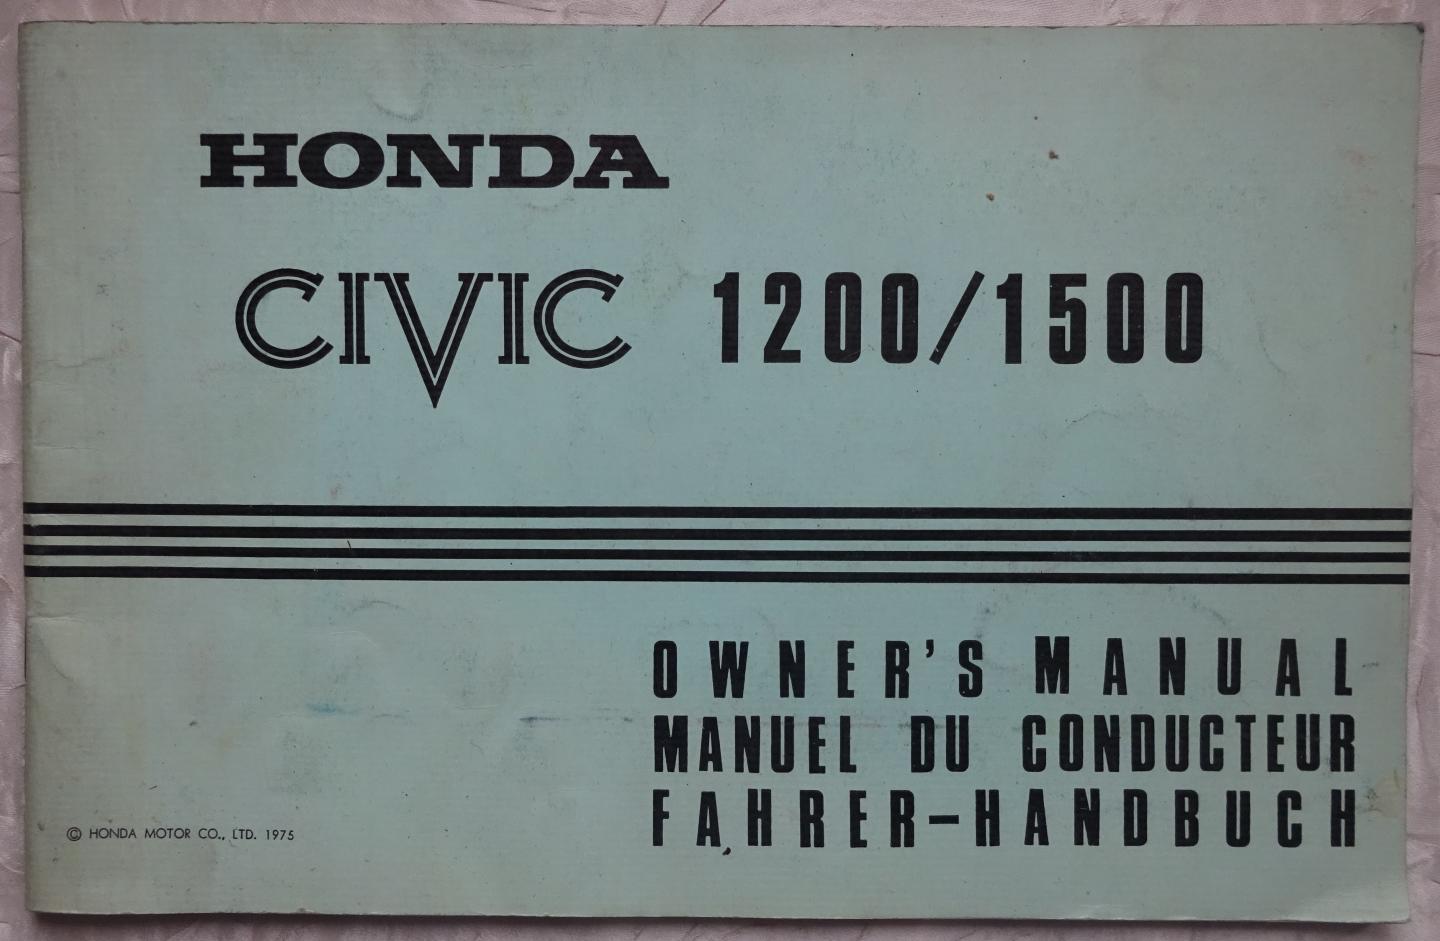 Redactie - Honda Civic 1200/1500 Owner's Manual; Manuel du Conducteur; Fahrer-Handbuch [instruktieboek]